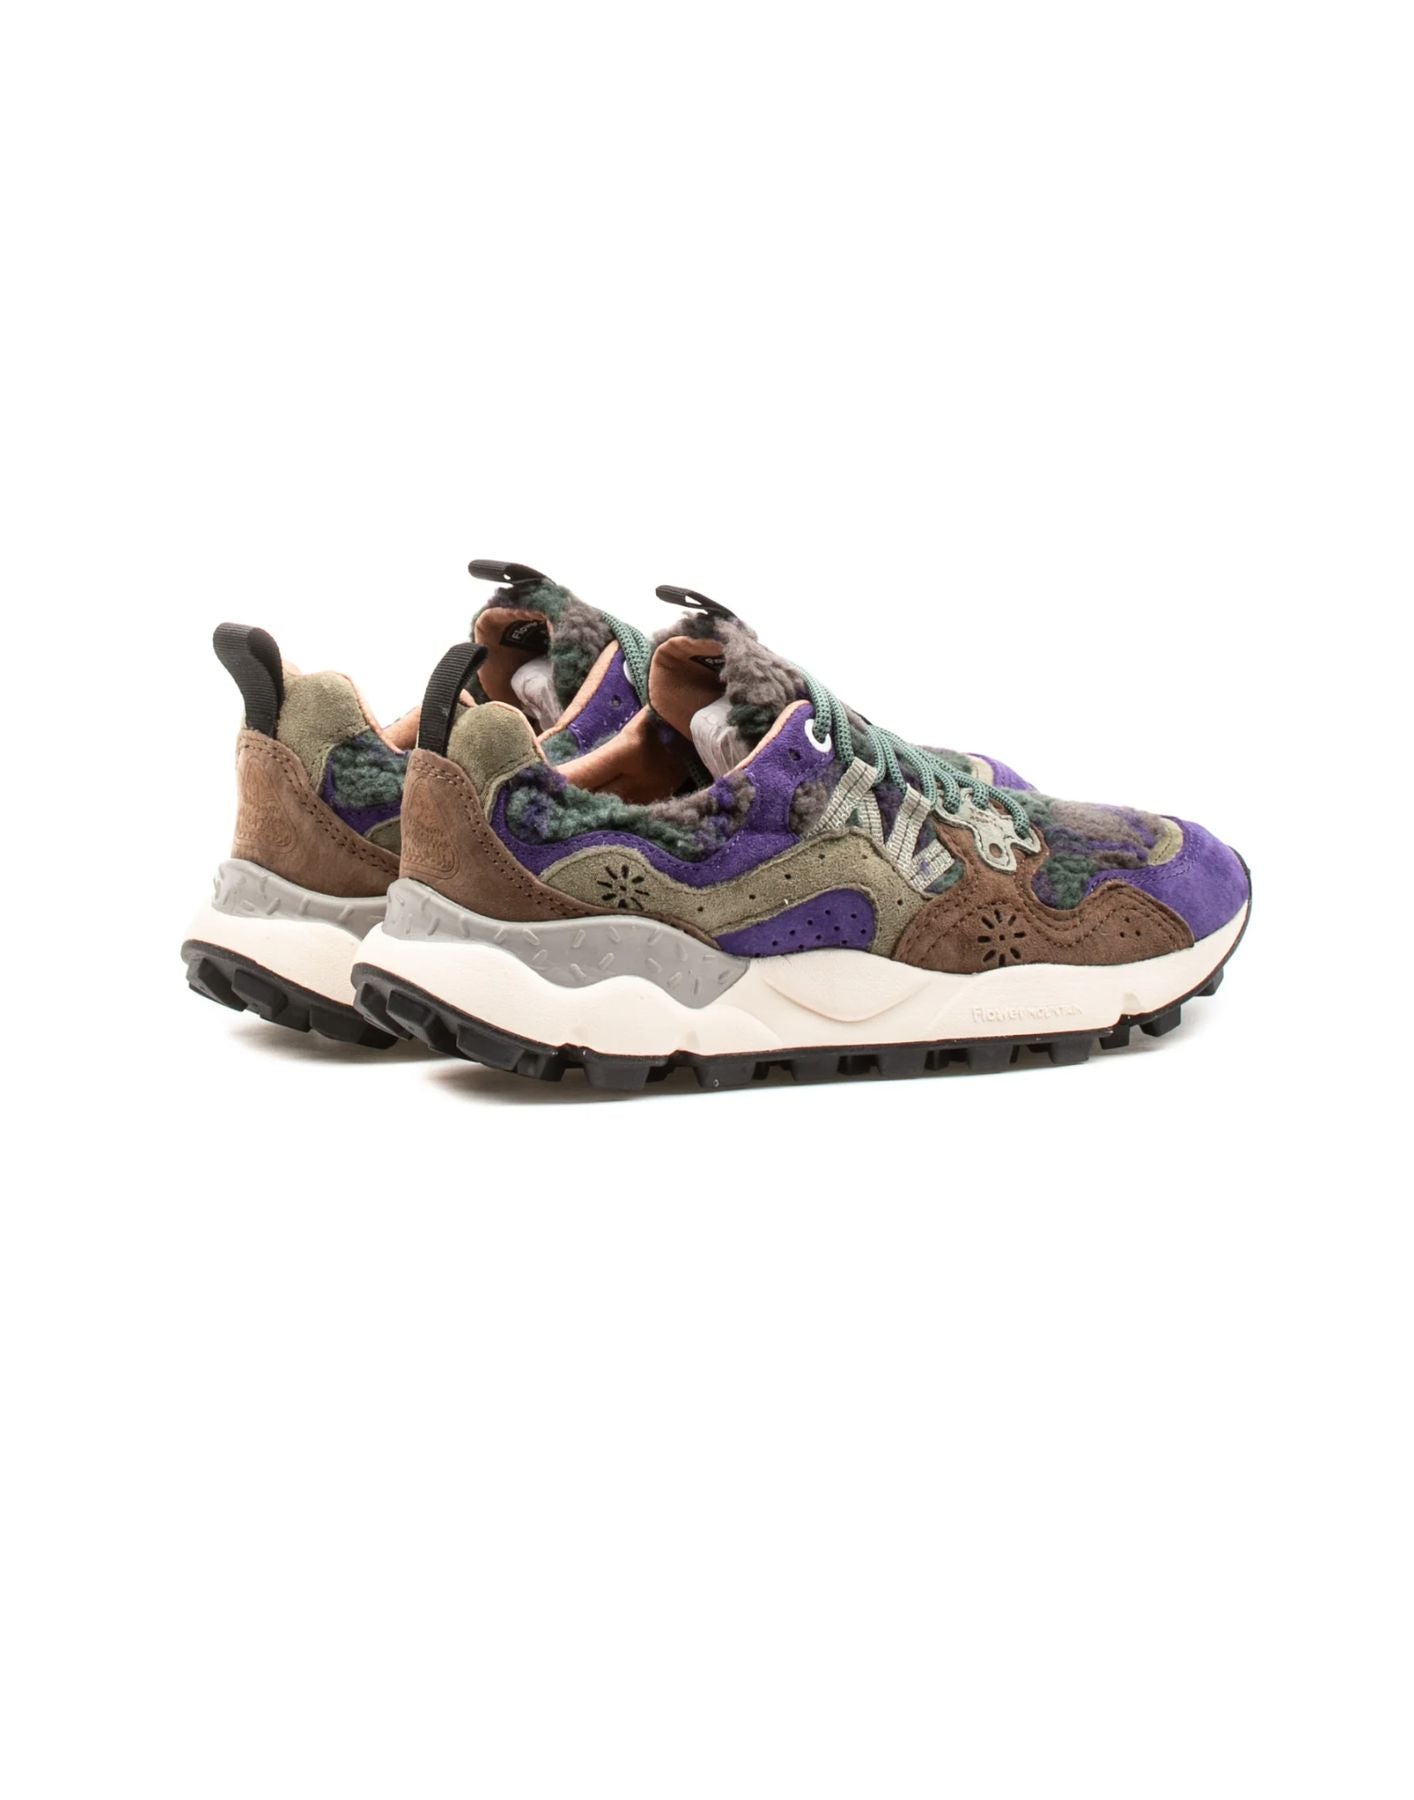 Zapatos para mujer yamano 3 uni violeta marrón Flower Mountain